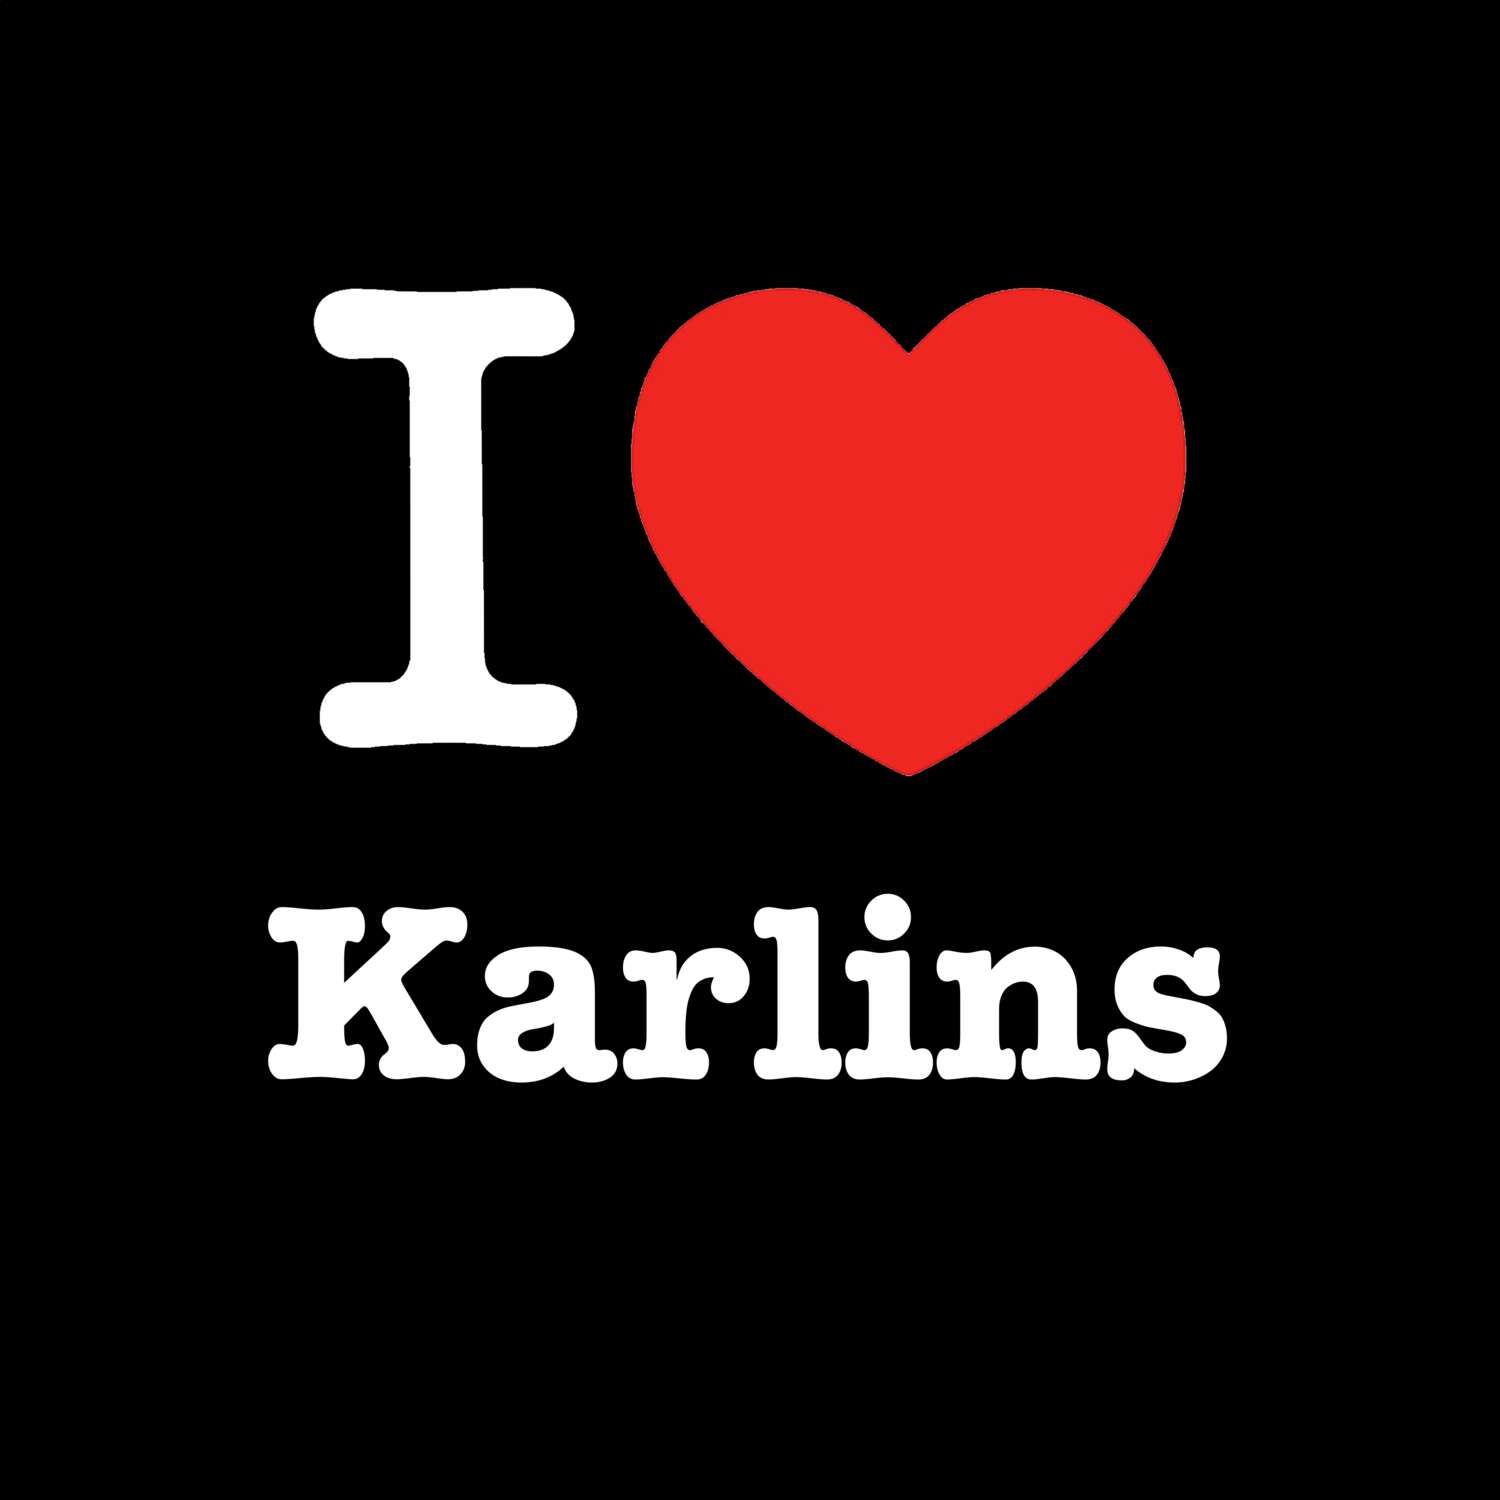 Karlins T-Shirt »I love«